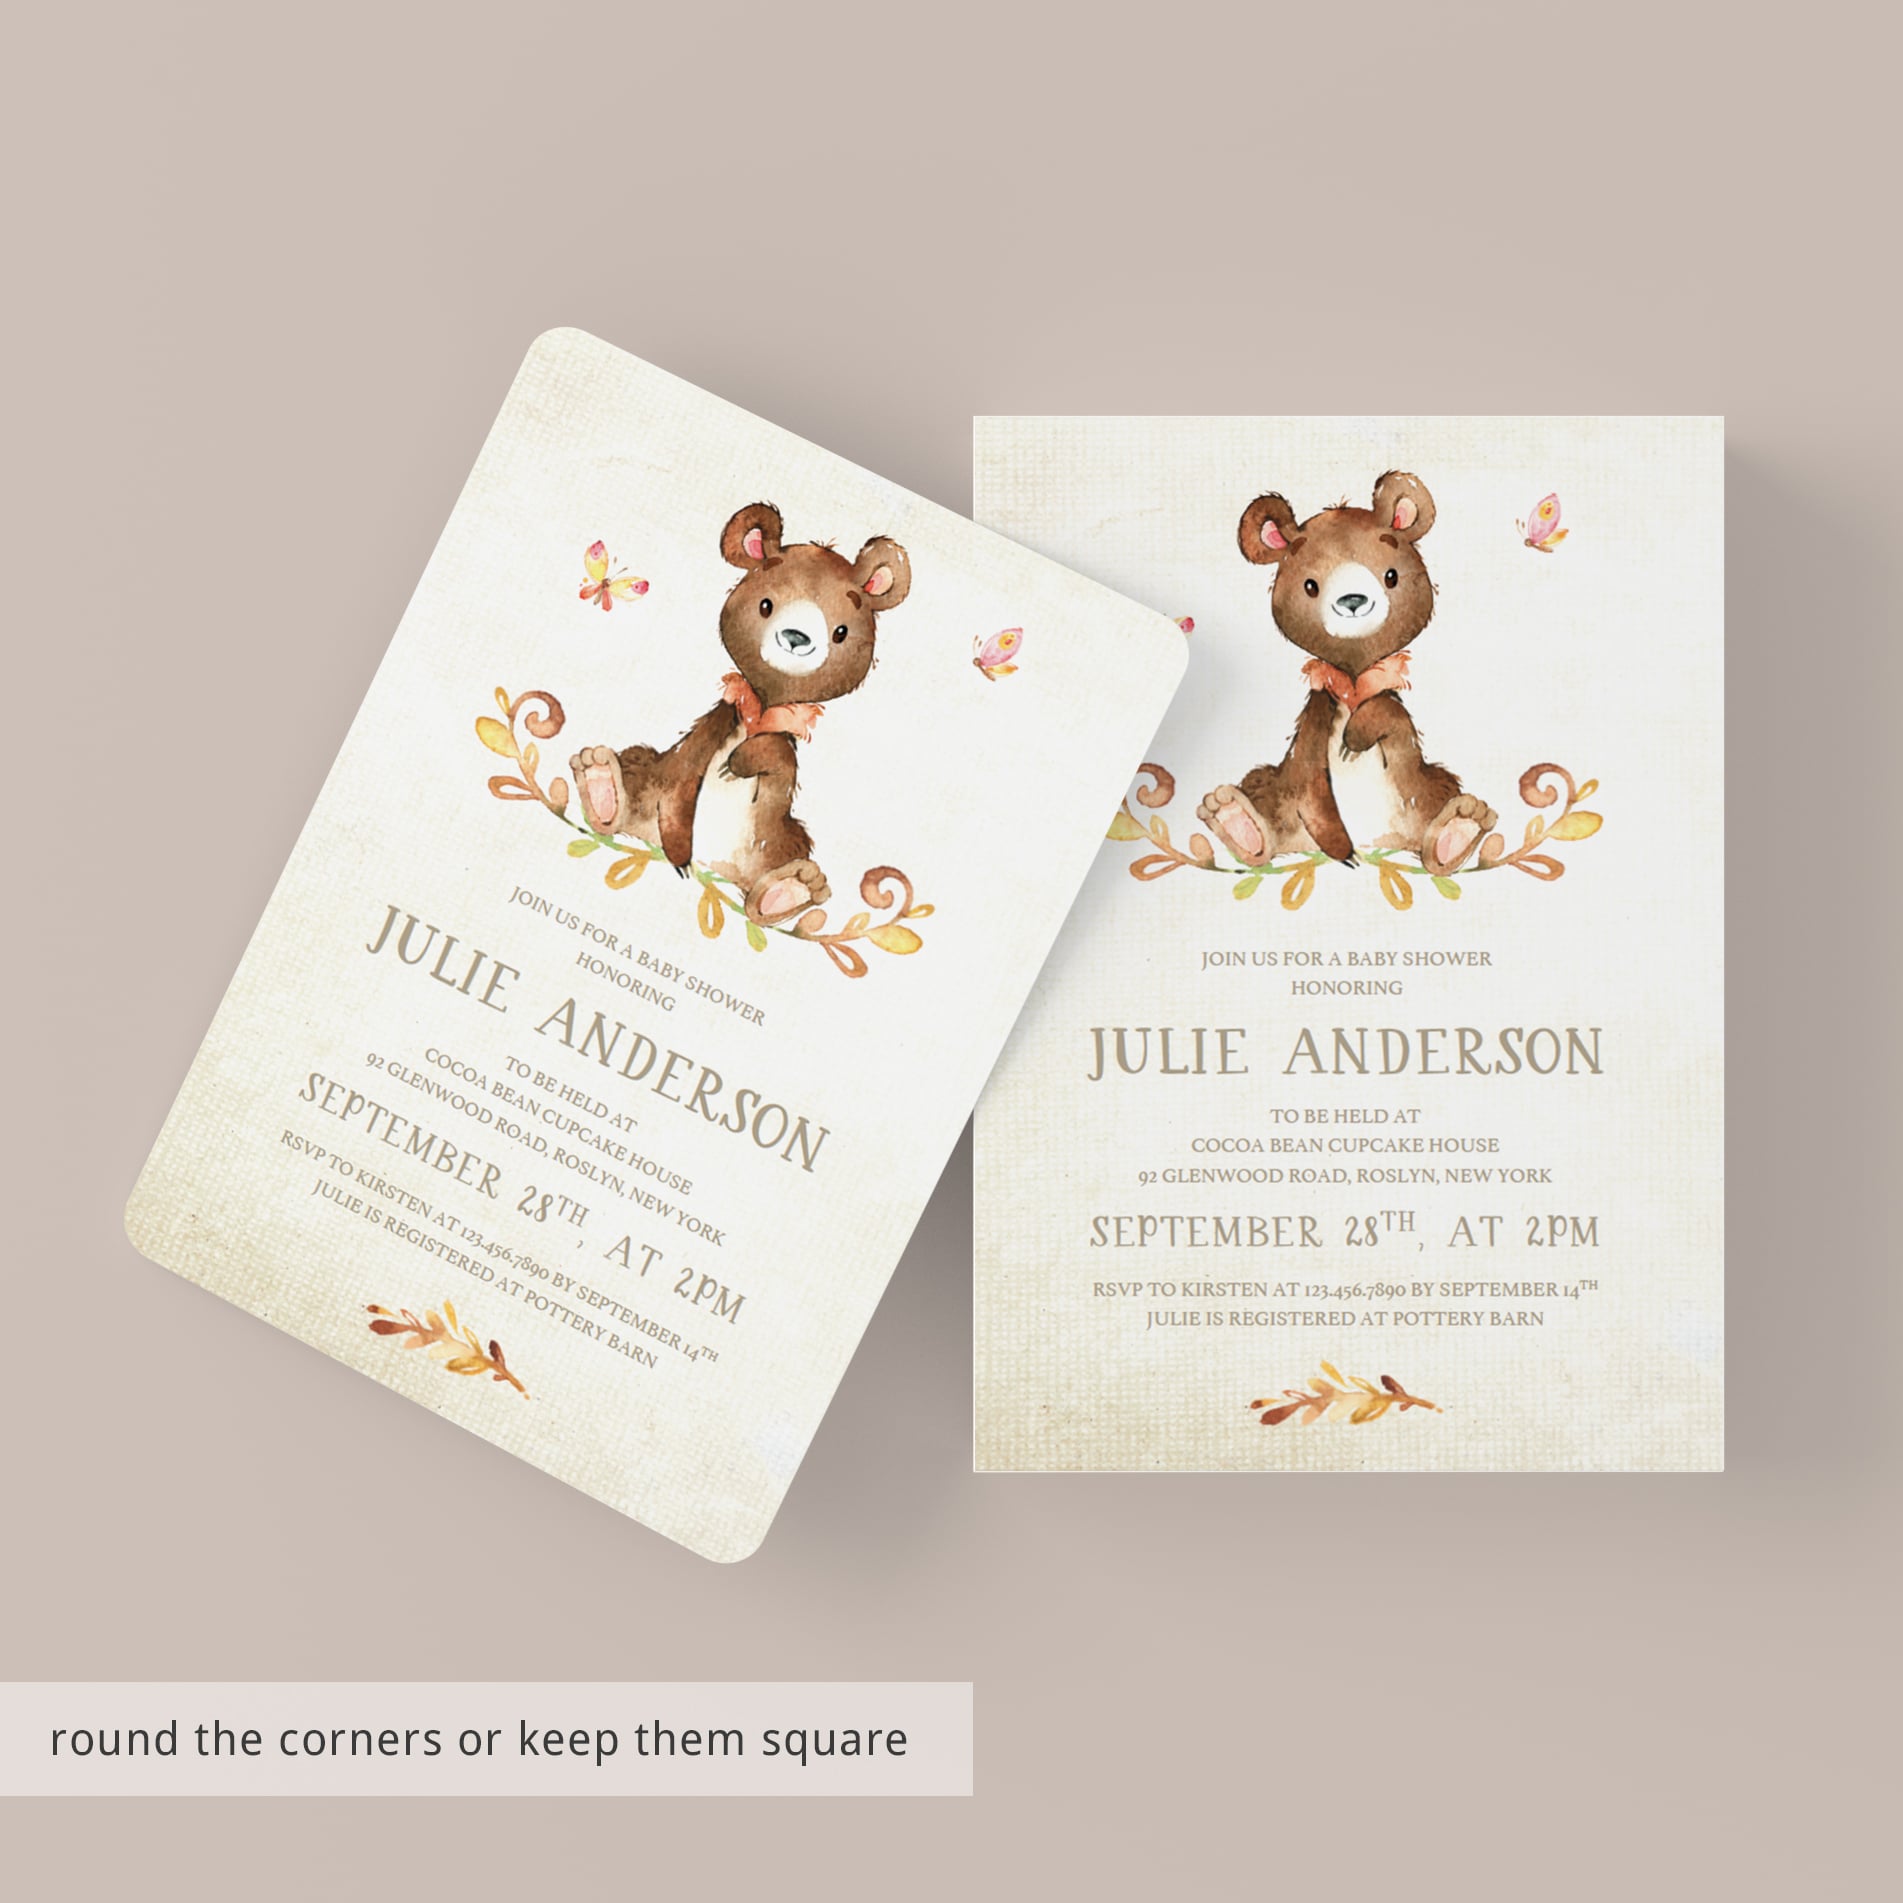 Little Bear Rustic Long Distance Baby Shower Invitation